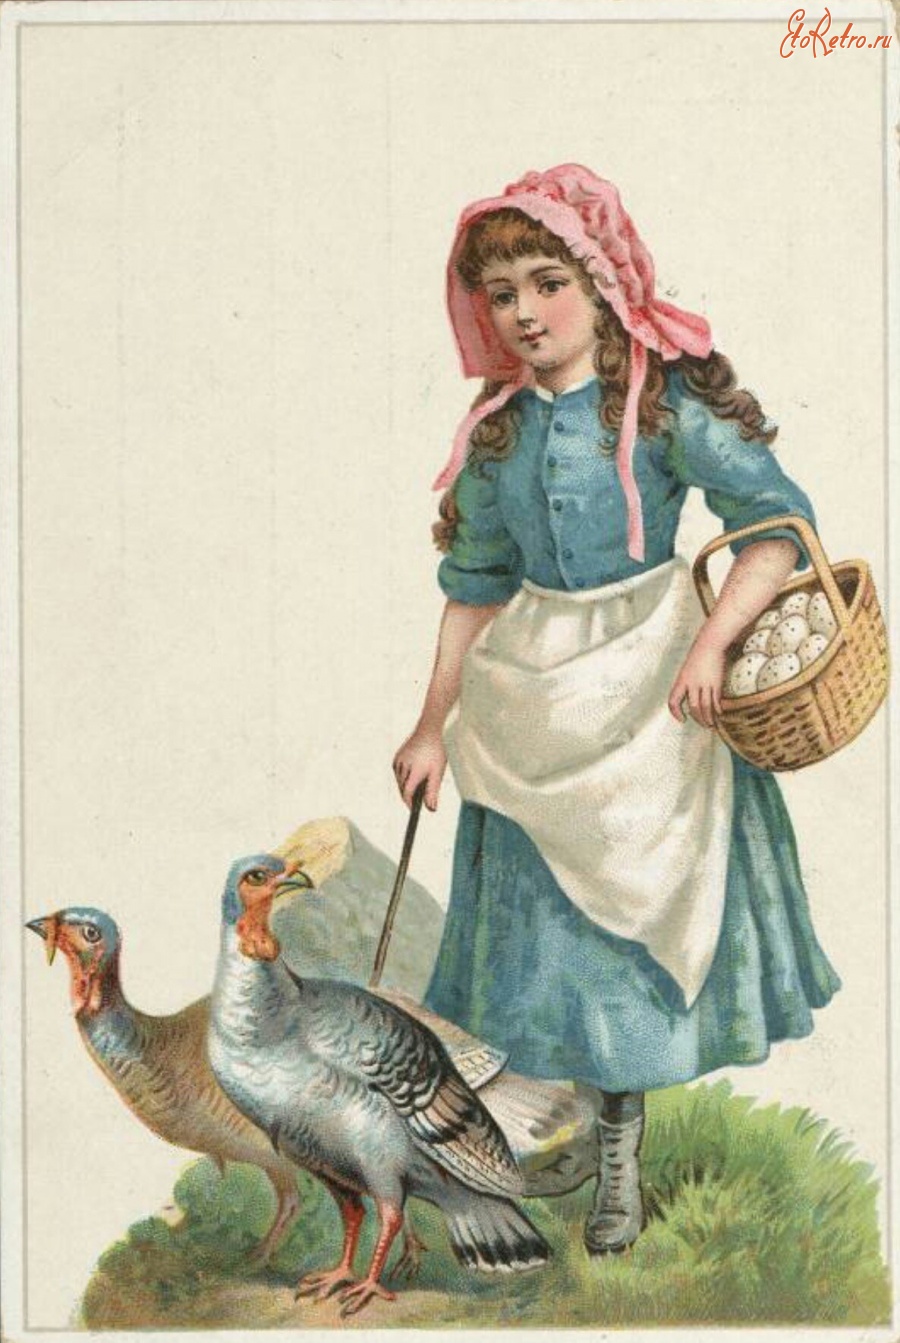 Ретро открытки - Девочка с корзиной яиц и два индюка